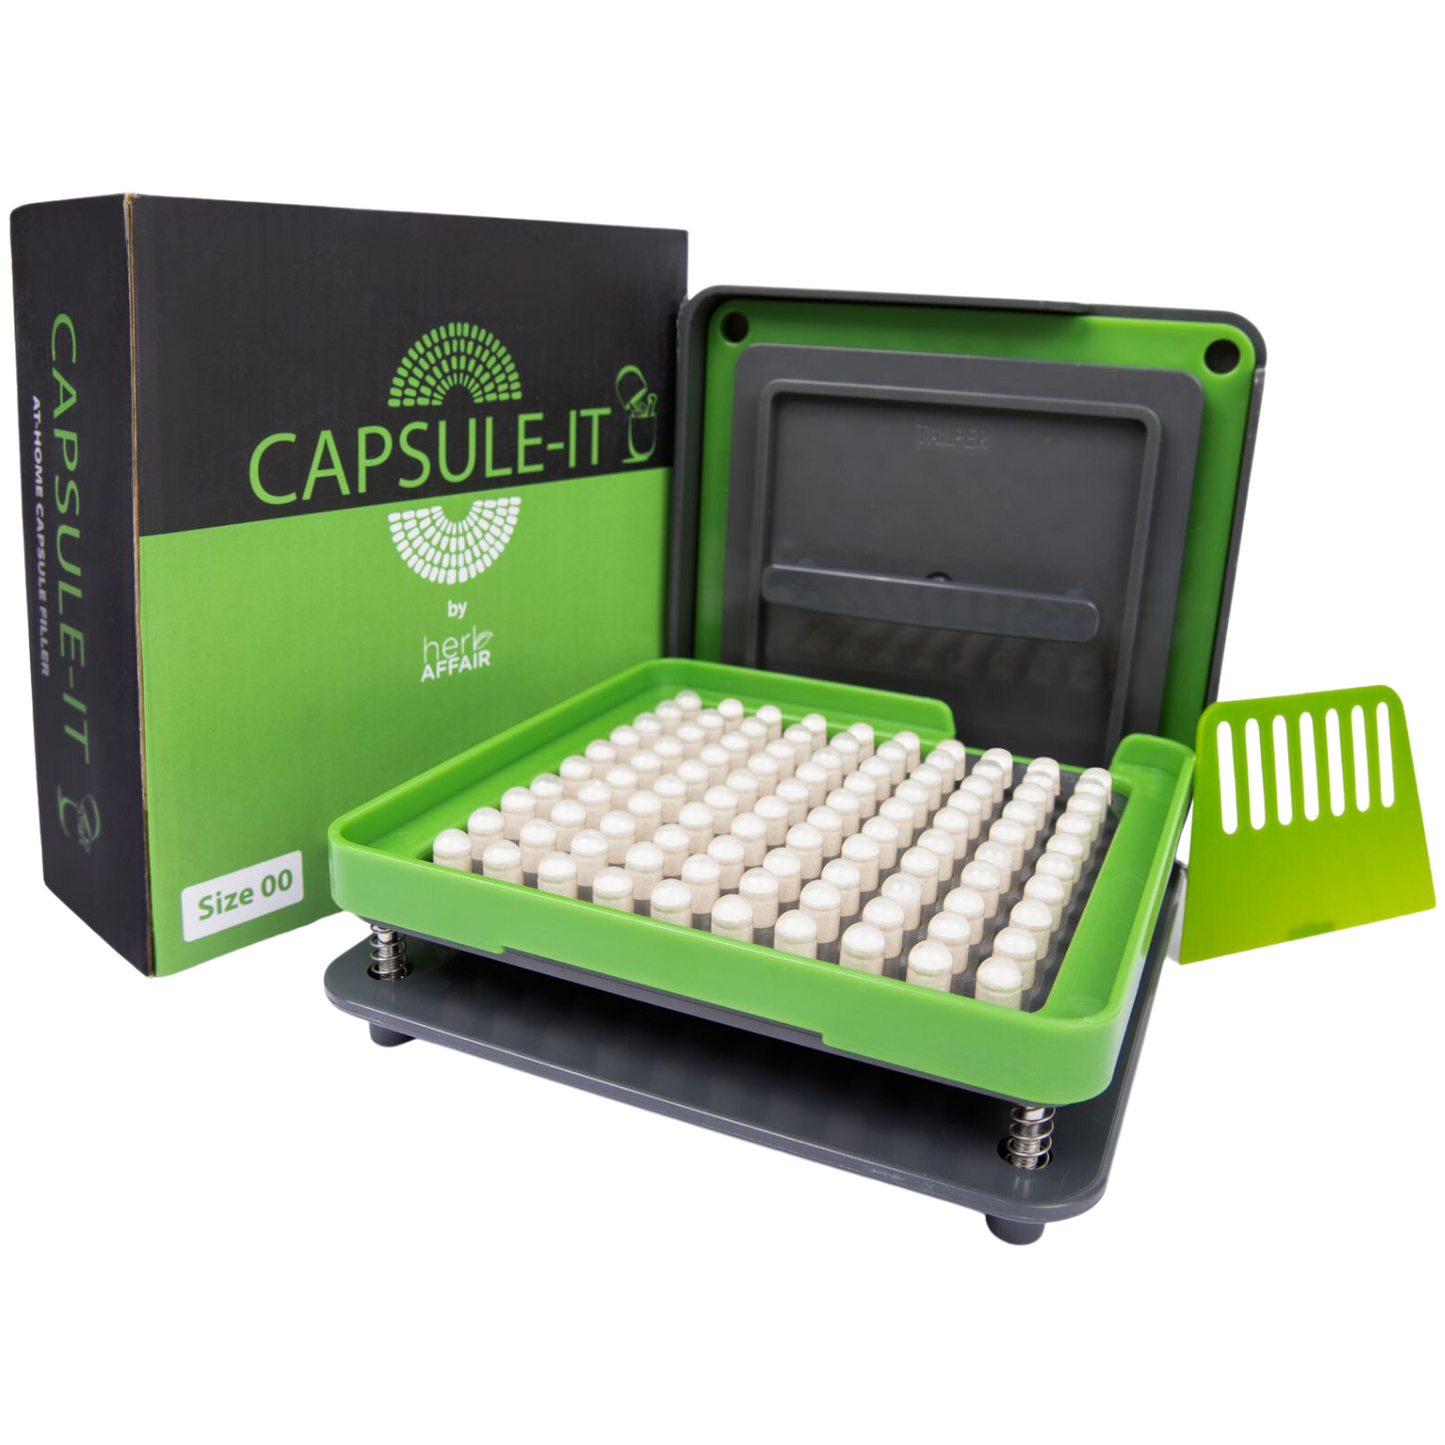 CAPSULE-IT Capsule Filler